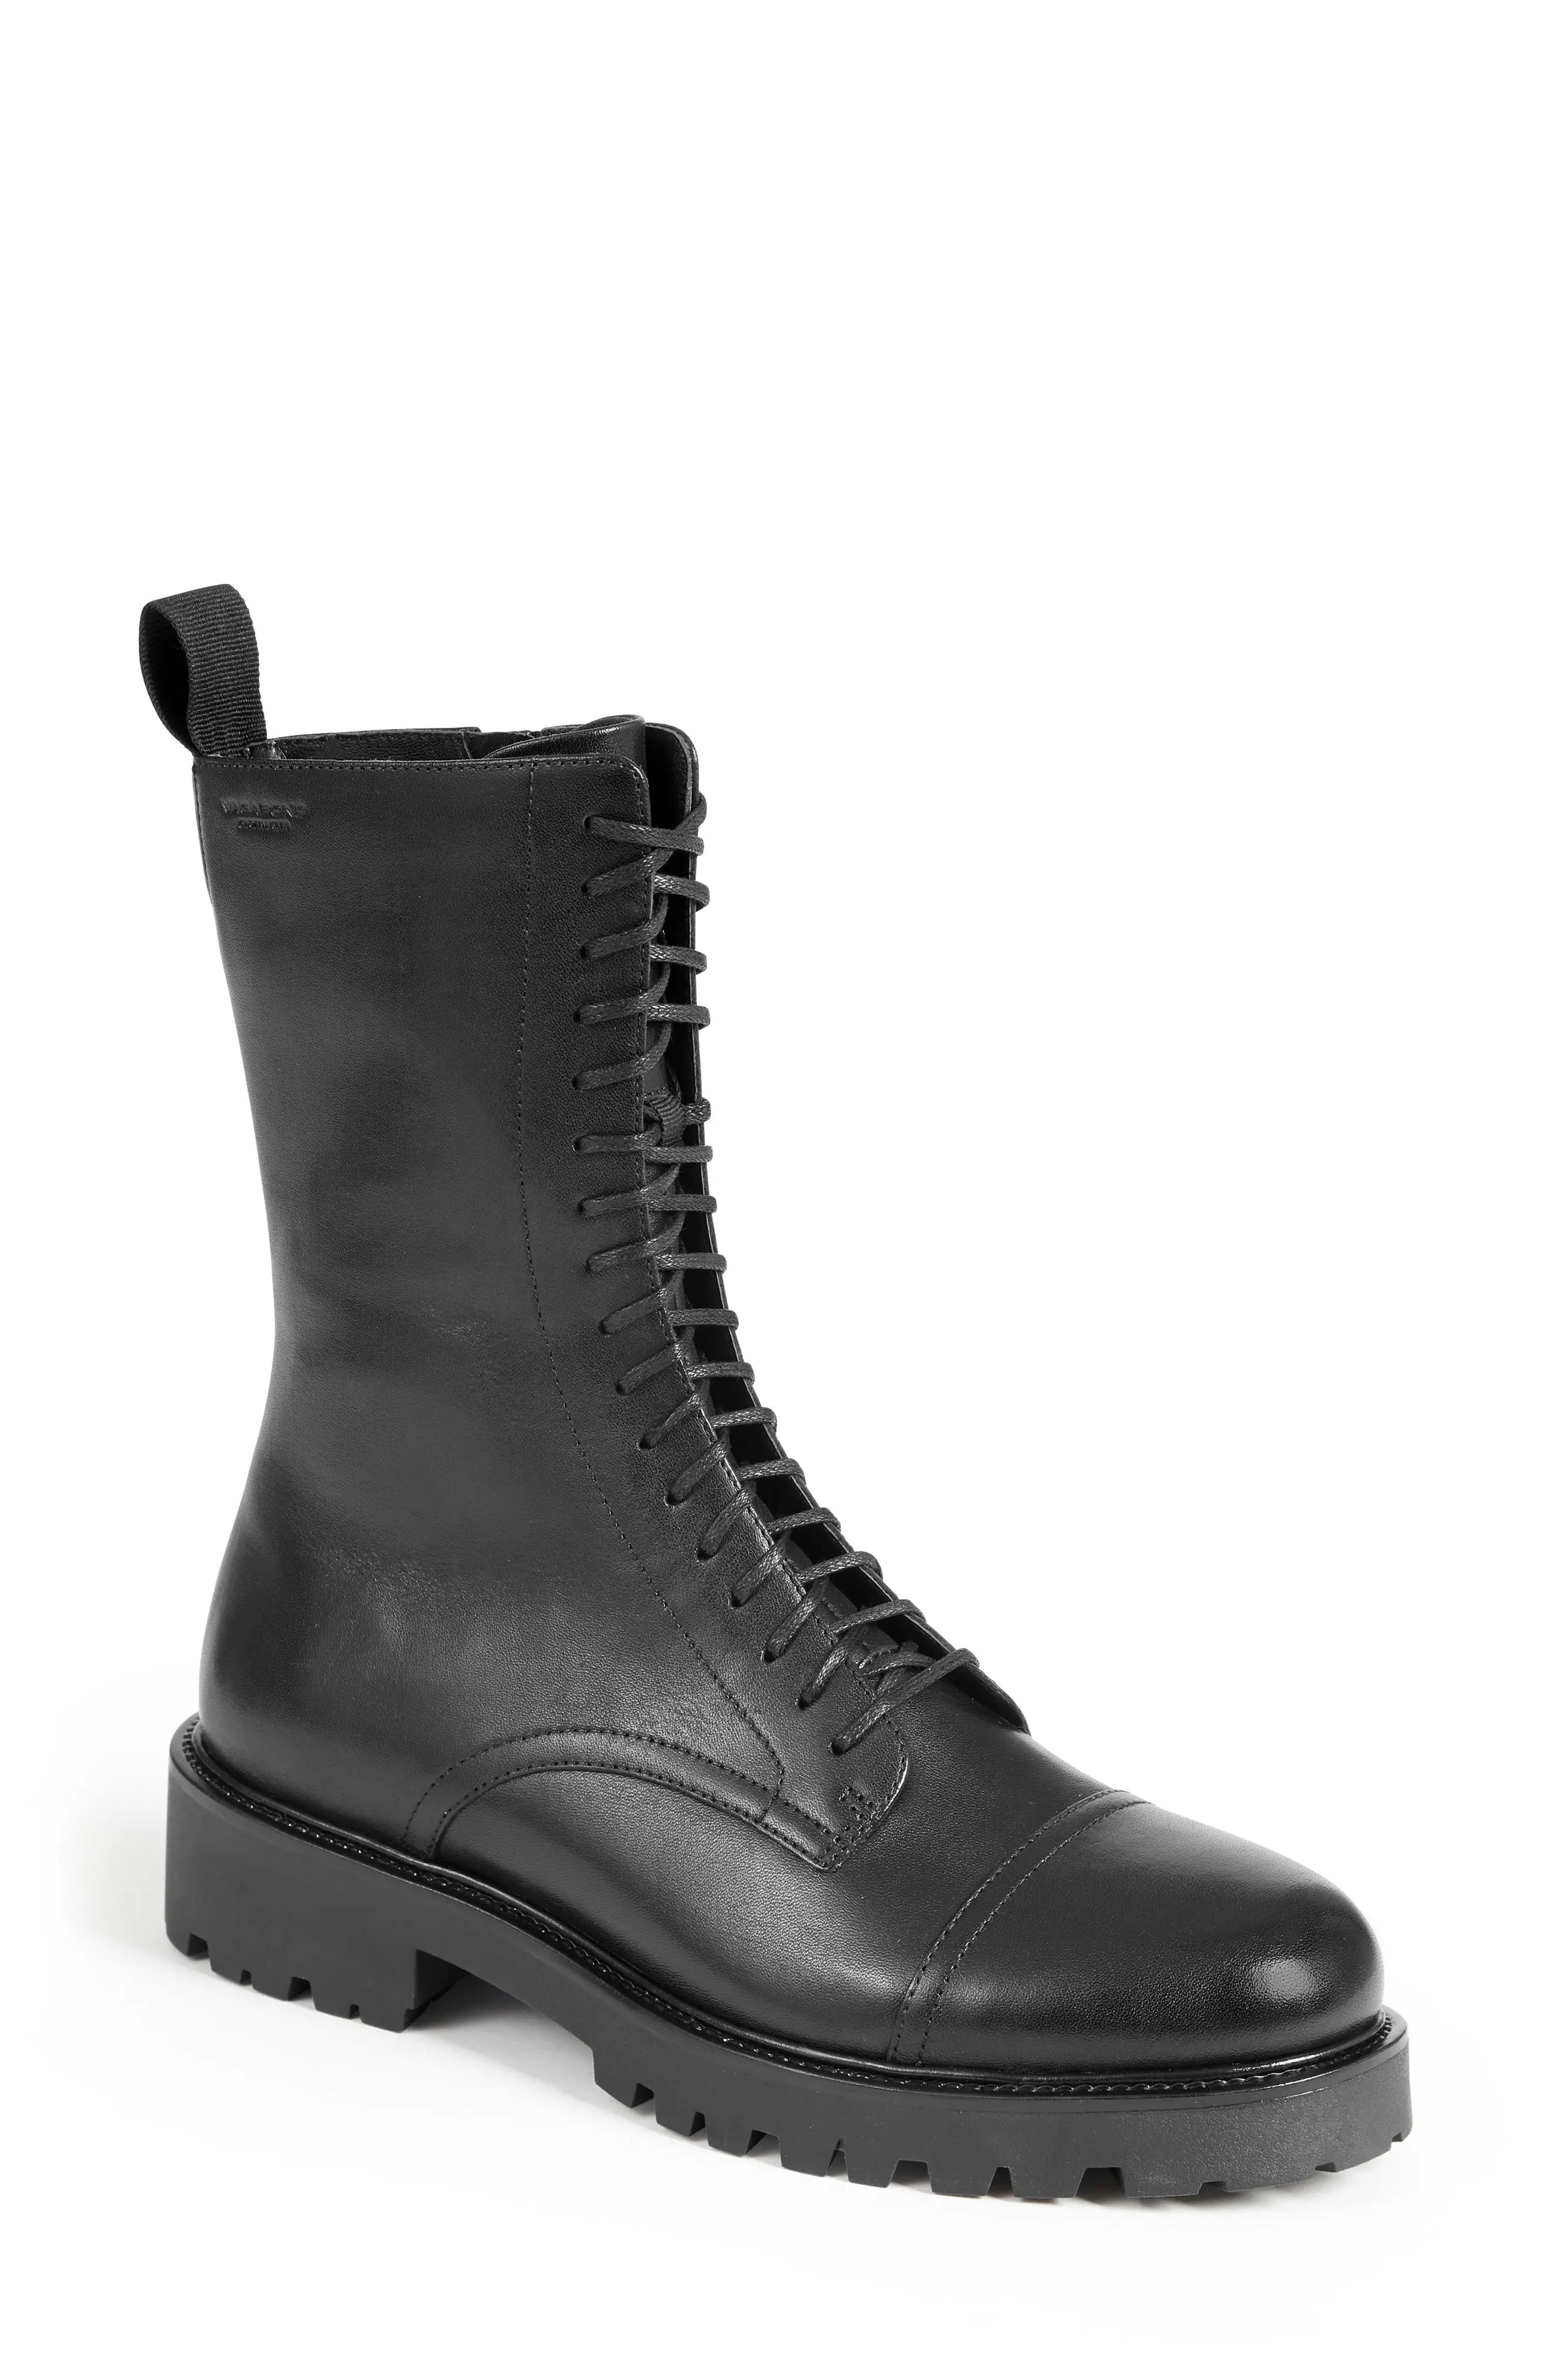 Vagabond Shoemakers Kenova Lace-Up Boot, Size 11Us in Black at Nordstrom | Nordstrom